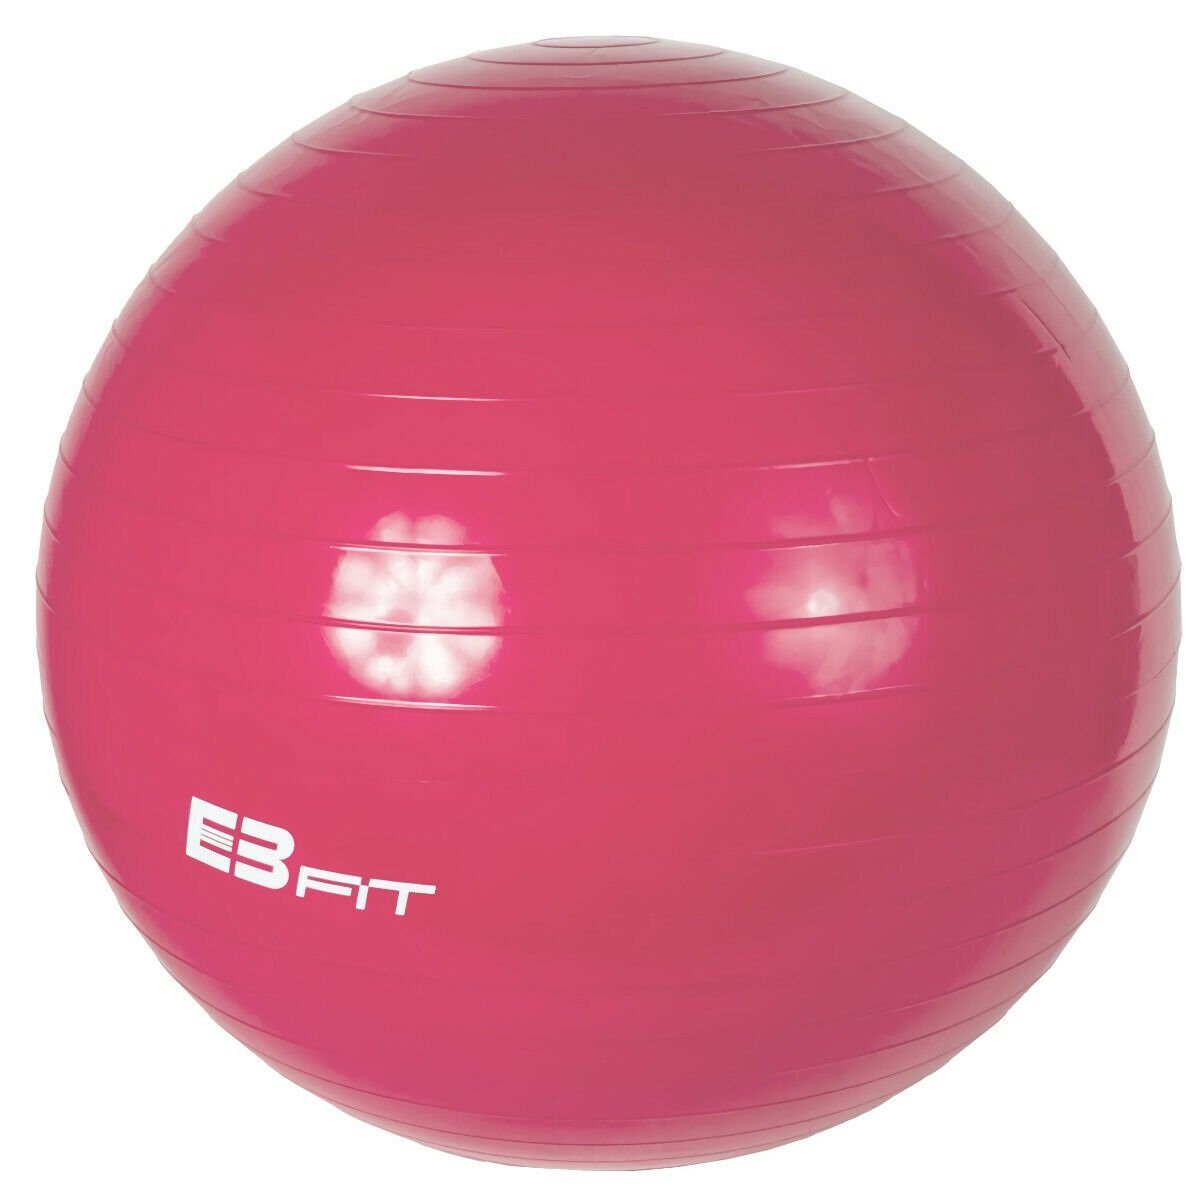 Fitness Gymnastikball Pink cm, 75 Gymnastikball für JOKA international Ø